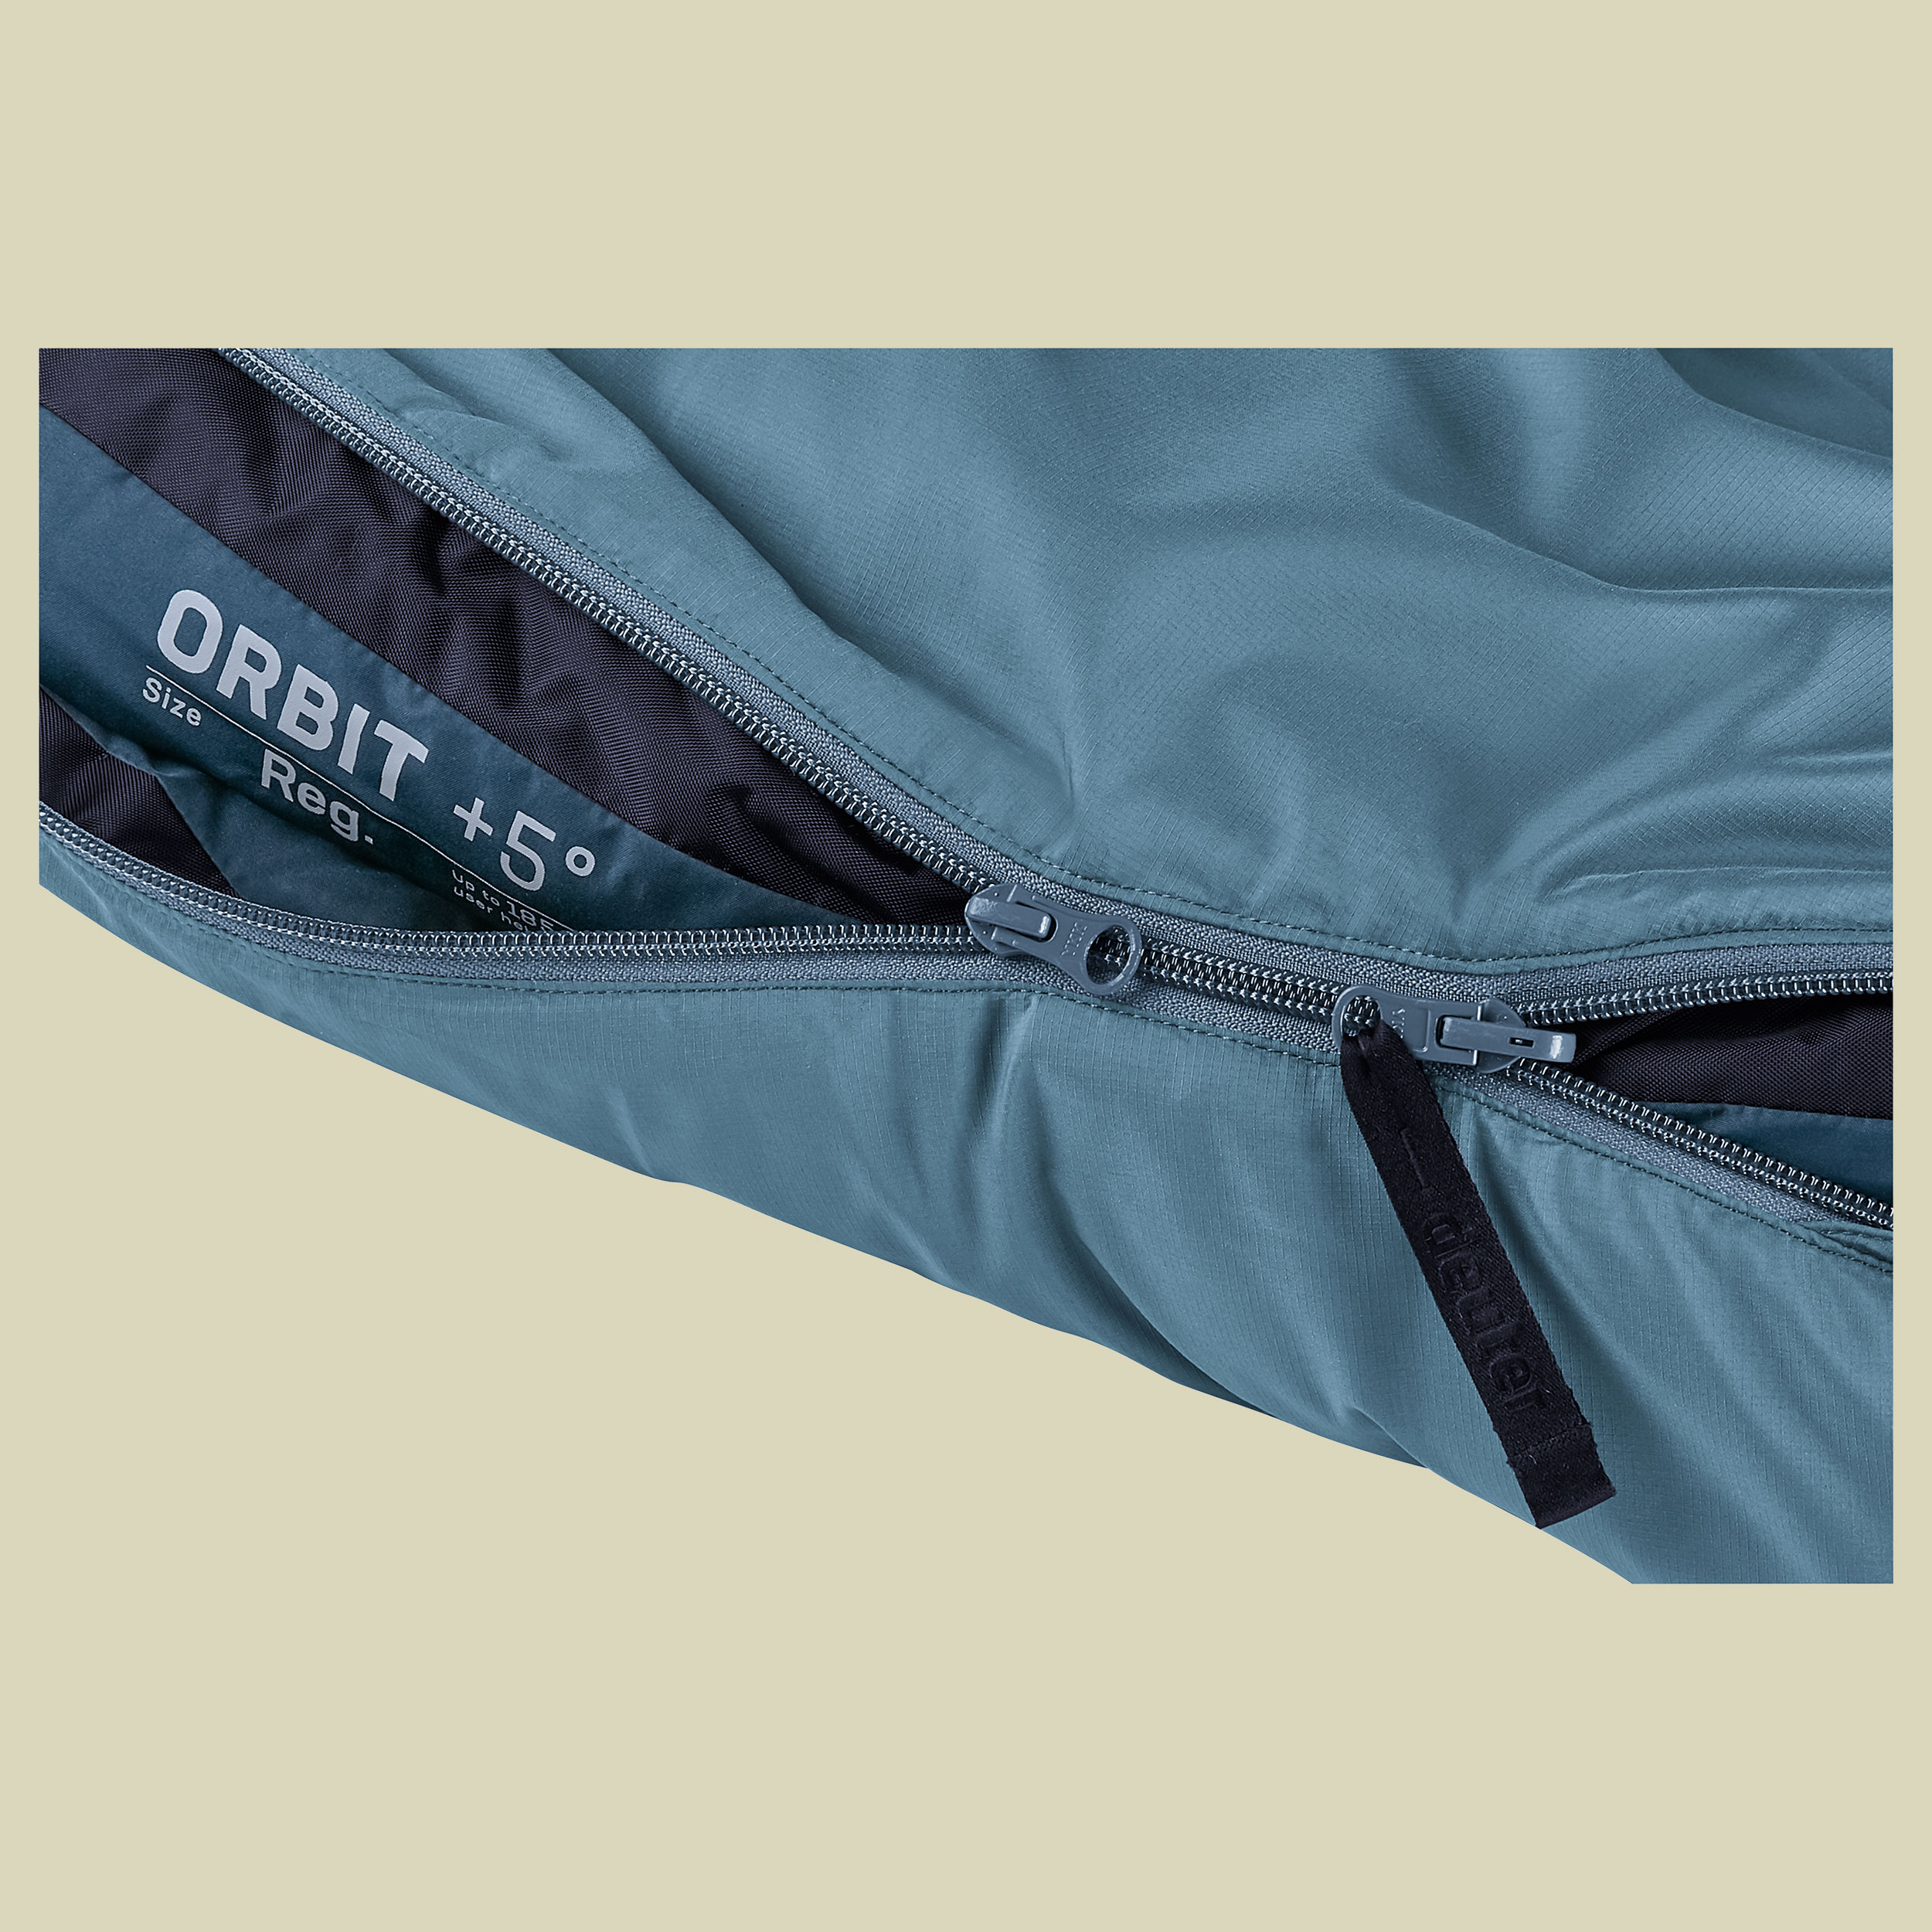 Orbit +5 Grad bis Körpergröße 185 cm Farbe atlantic-ink, Reißverschluss links